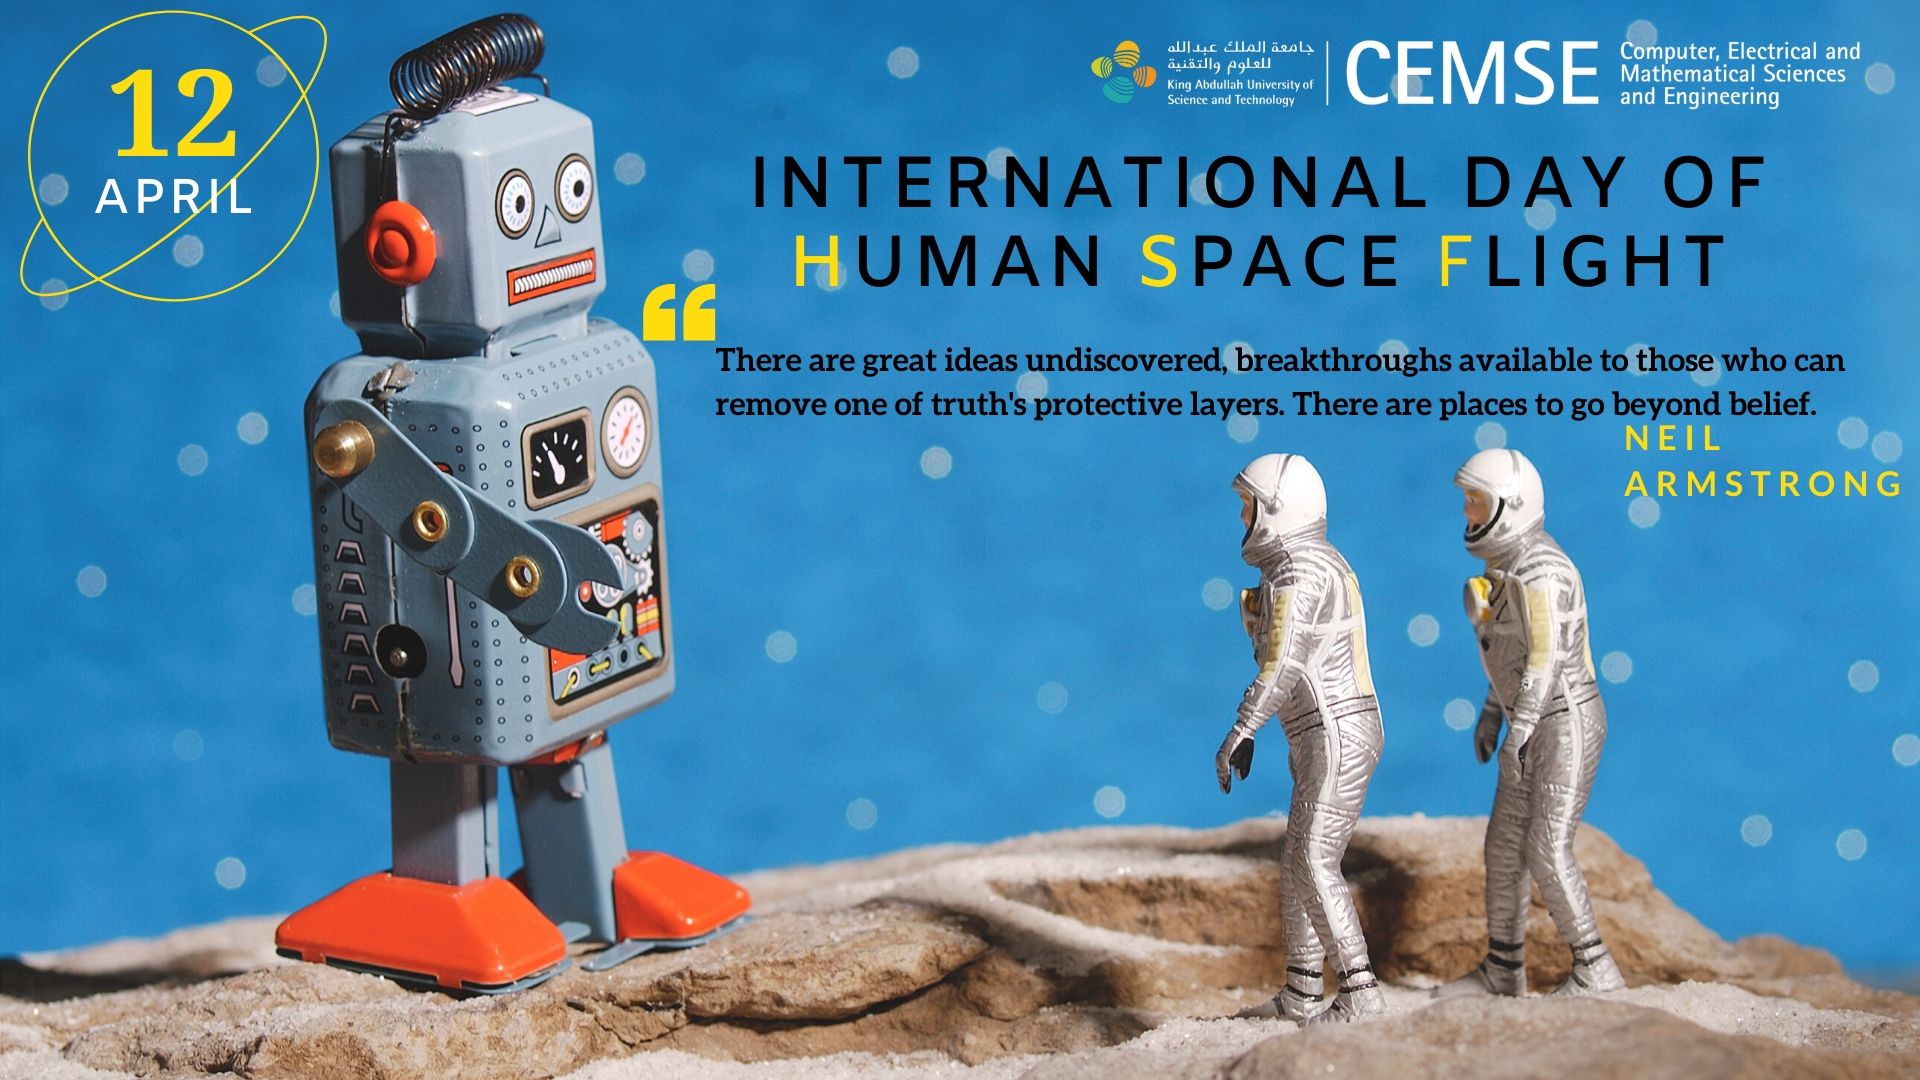 KAUST CEMSE International Day of Human Space Flight